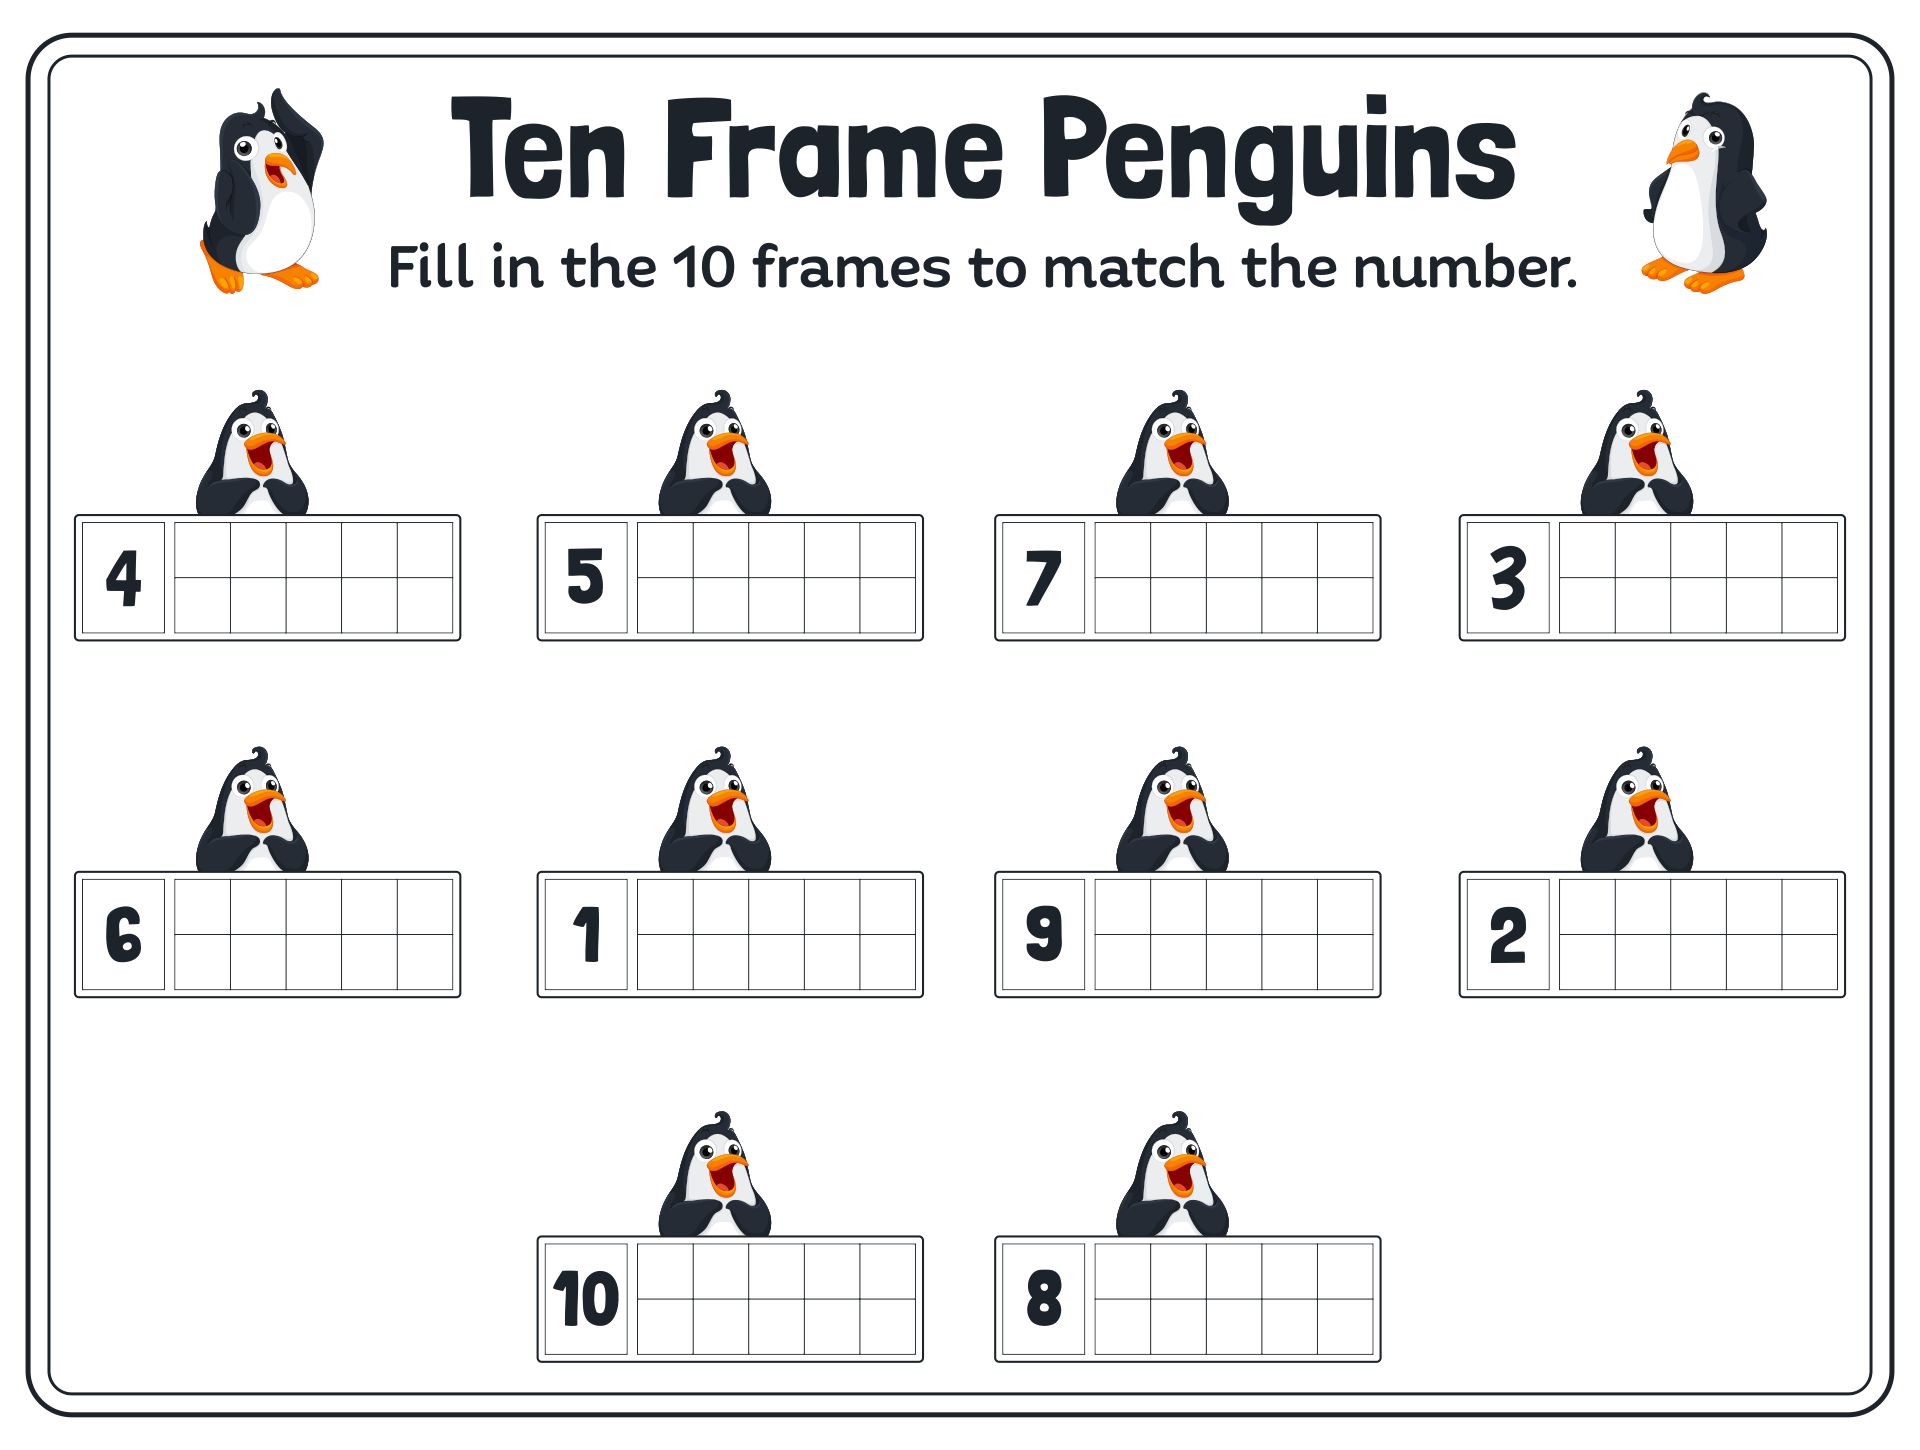 Printable Penguin Ten Frame Counting Worksheet